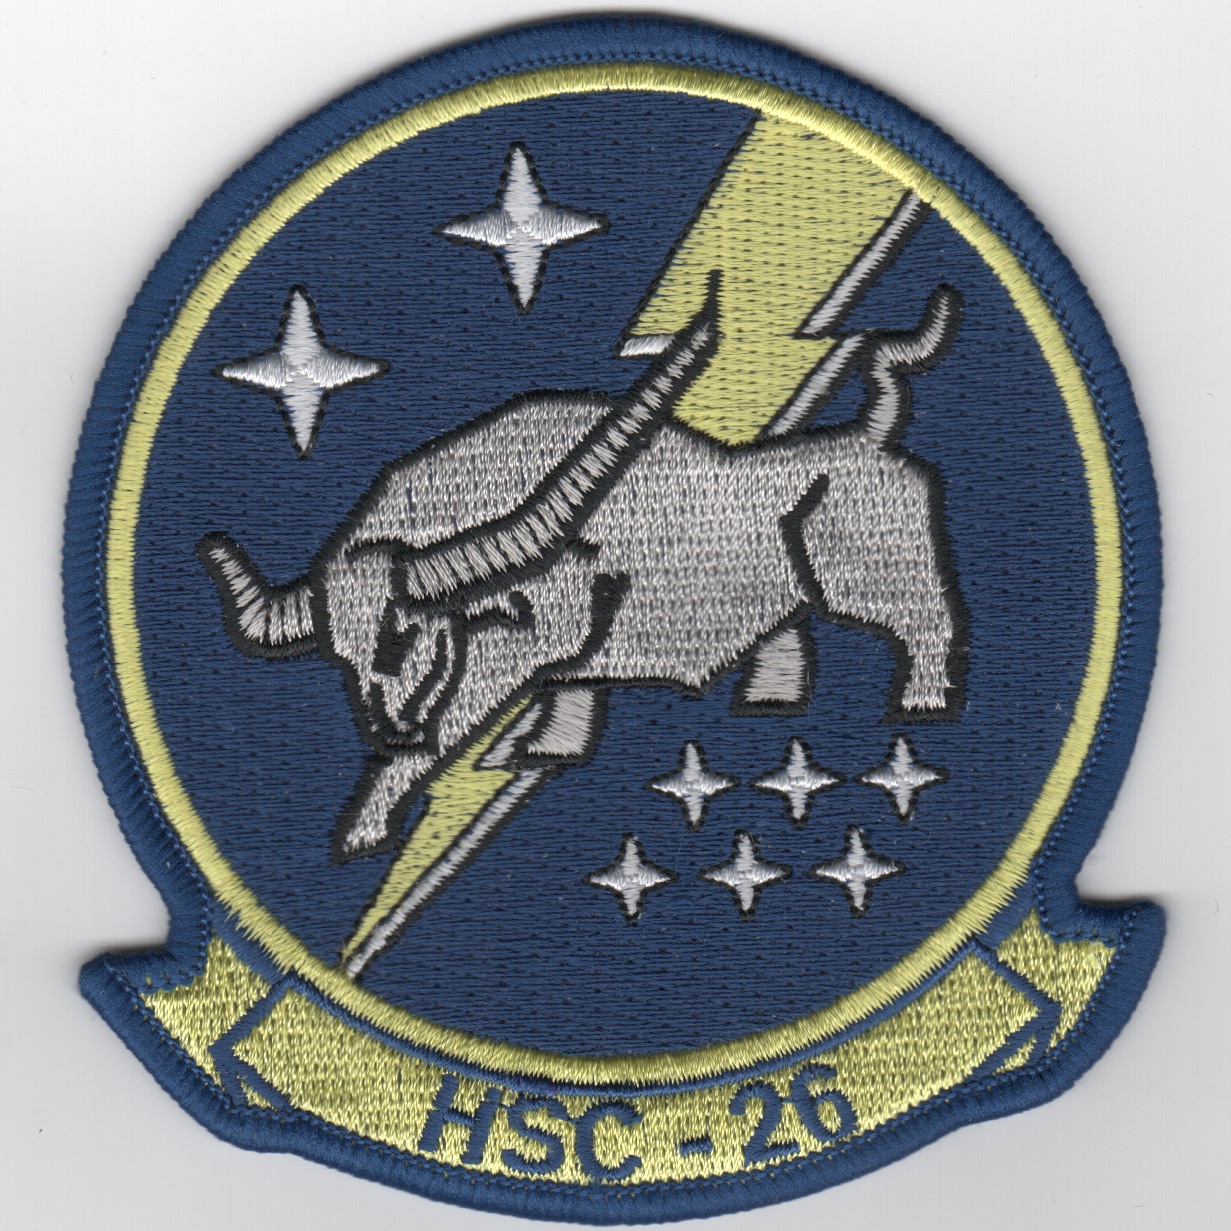 HSC-26 Squadron Patch (Blue/Bull)